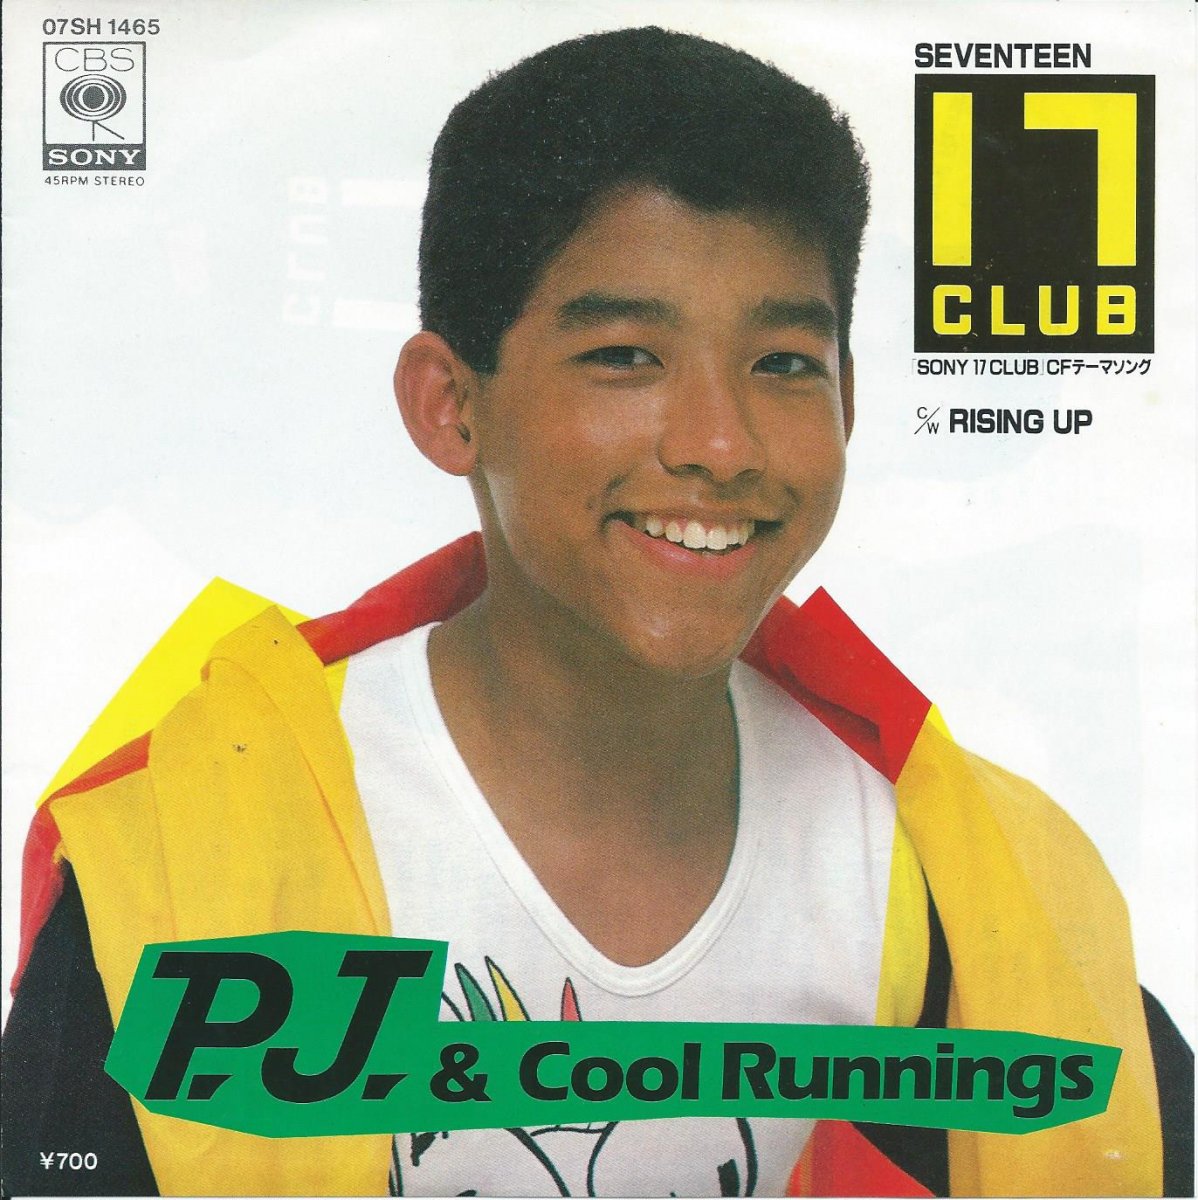 P.J. & COOL RUNNINGS / 17 CLUB (SEVENTEEN CLUB) / RISING UP (7